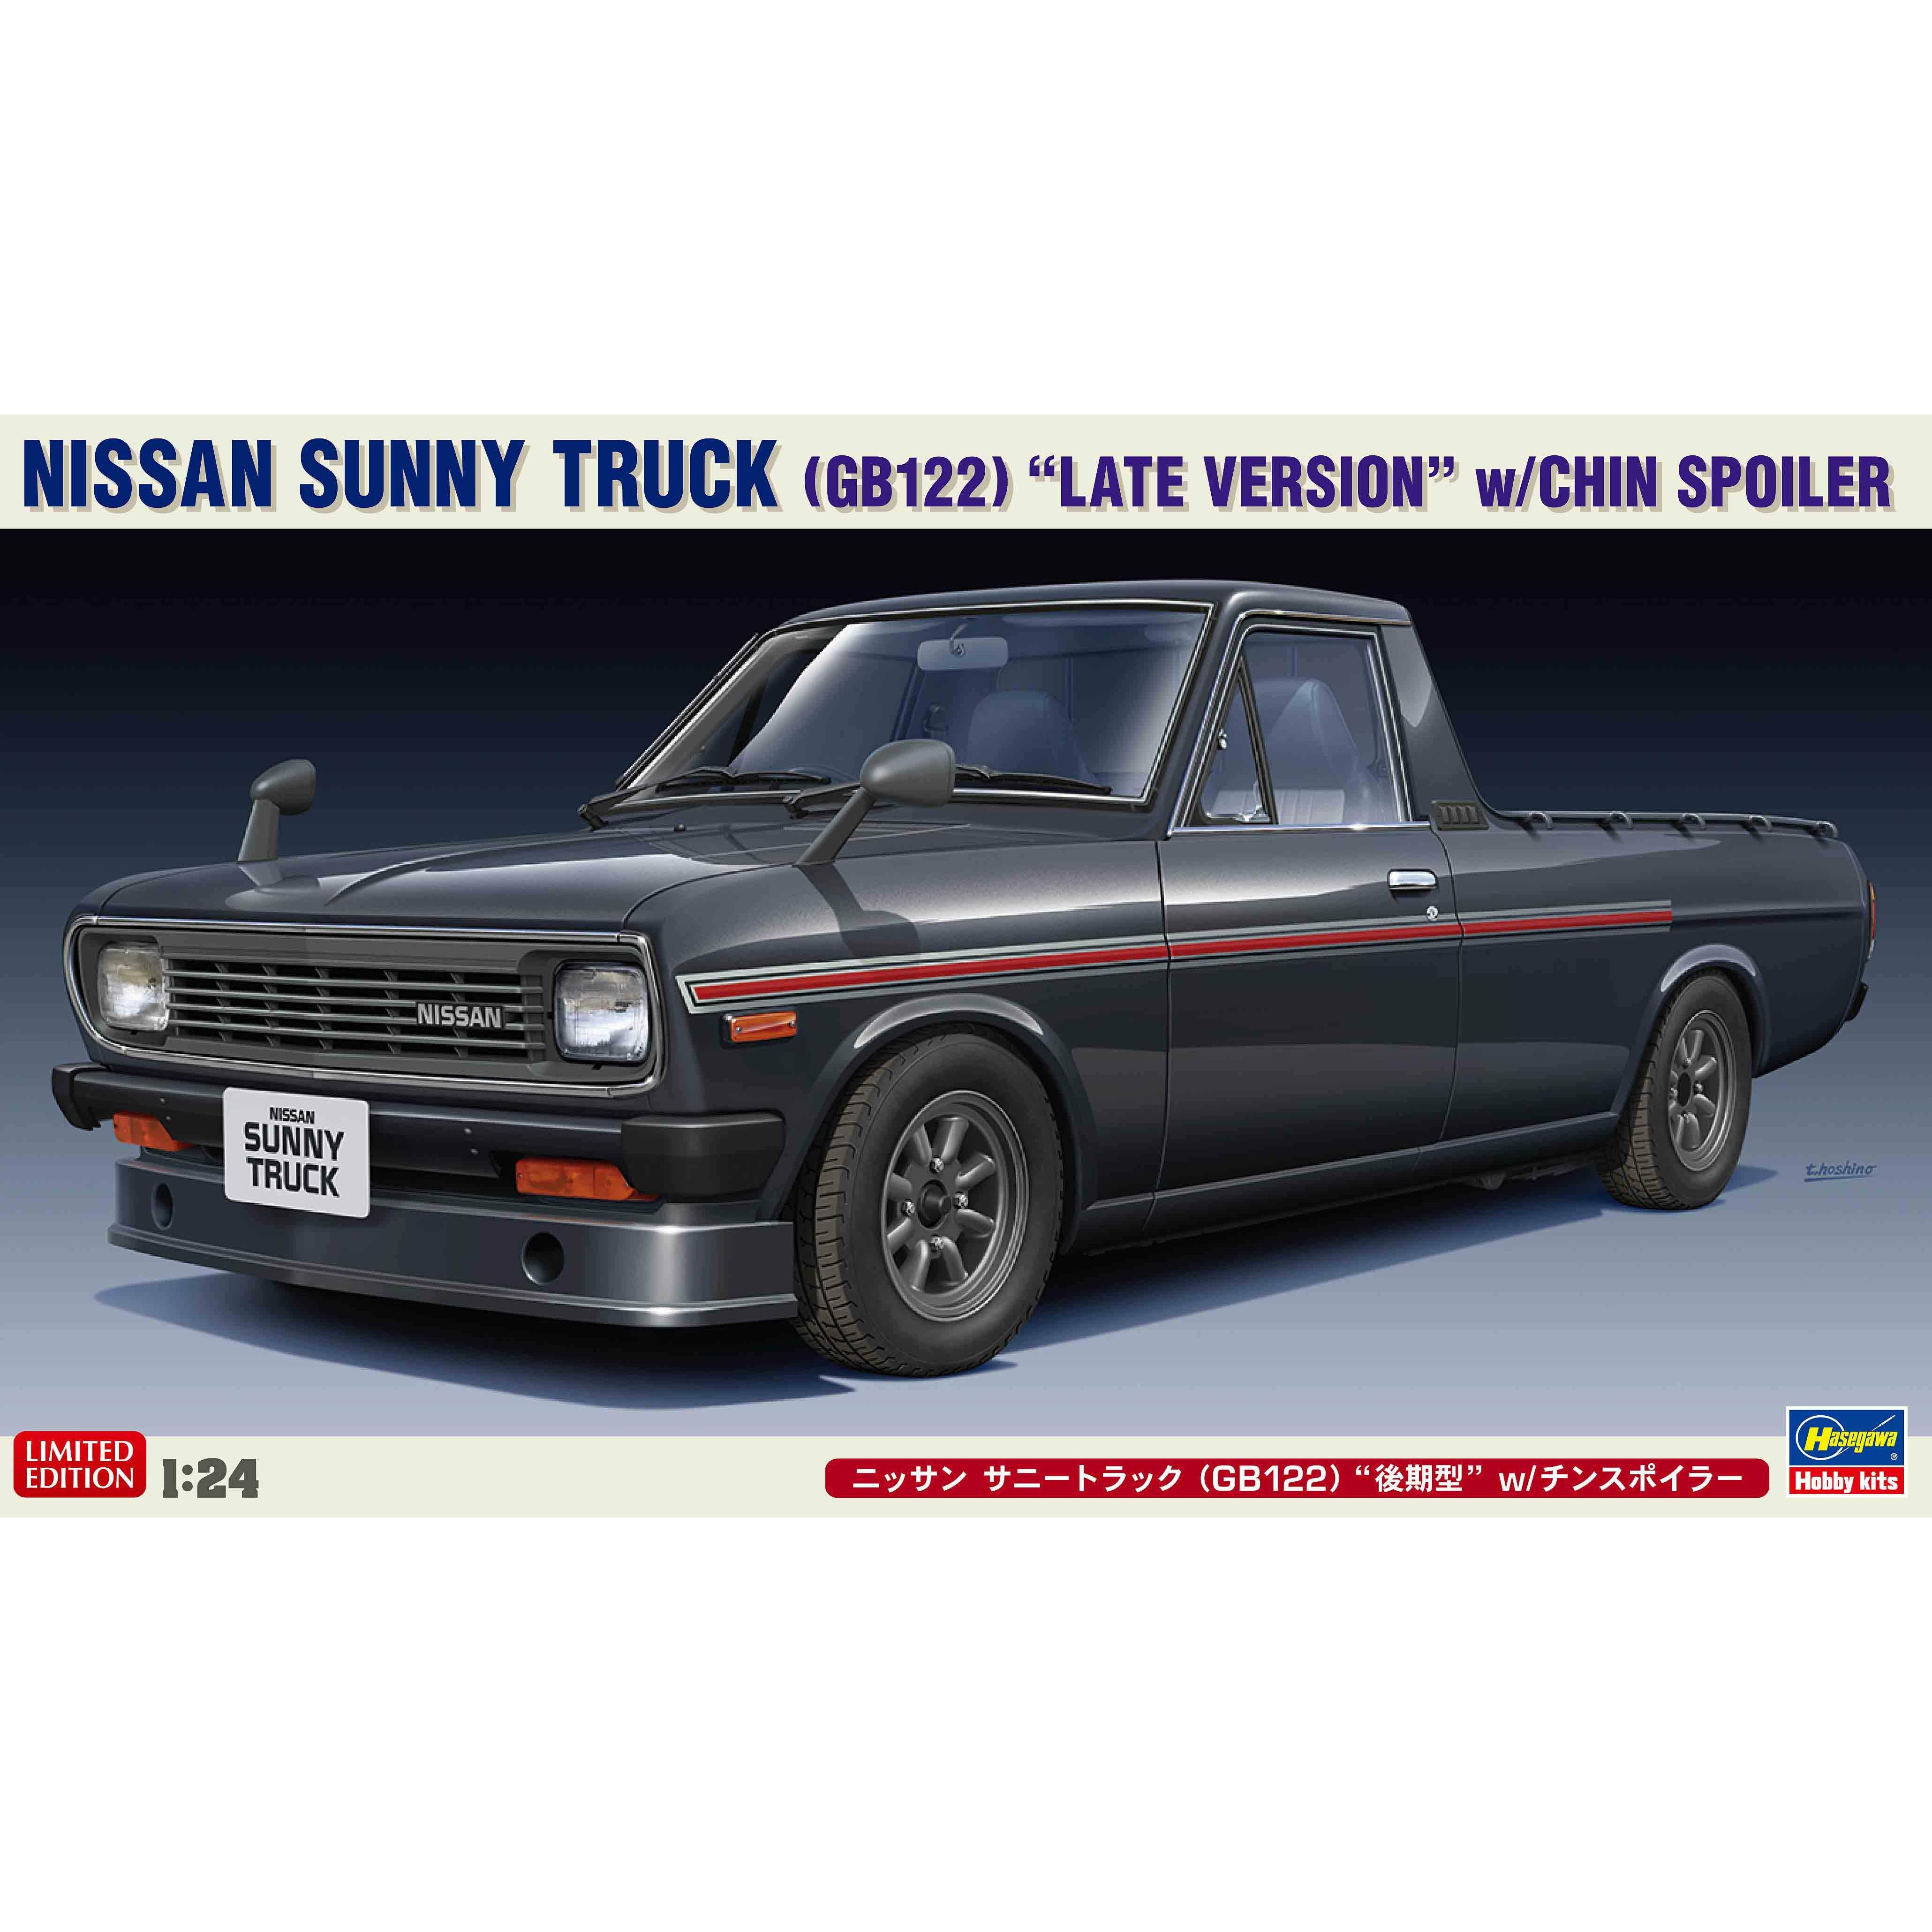 Nissan Sunny Truck (GB122) "Late Version" W/Chin Spoiler 1/24 Model Car Kit #20552 Hasegawa